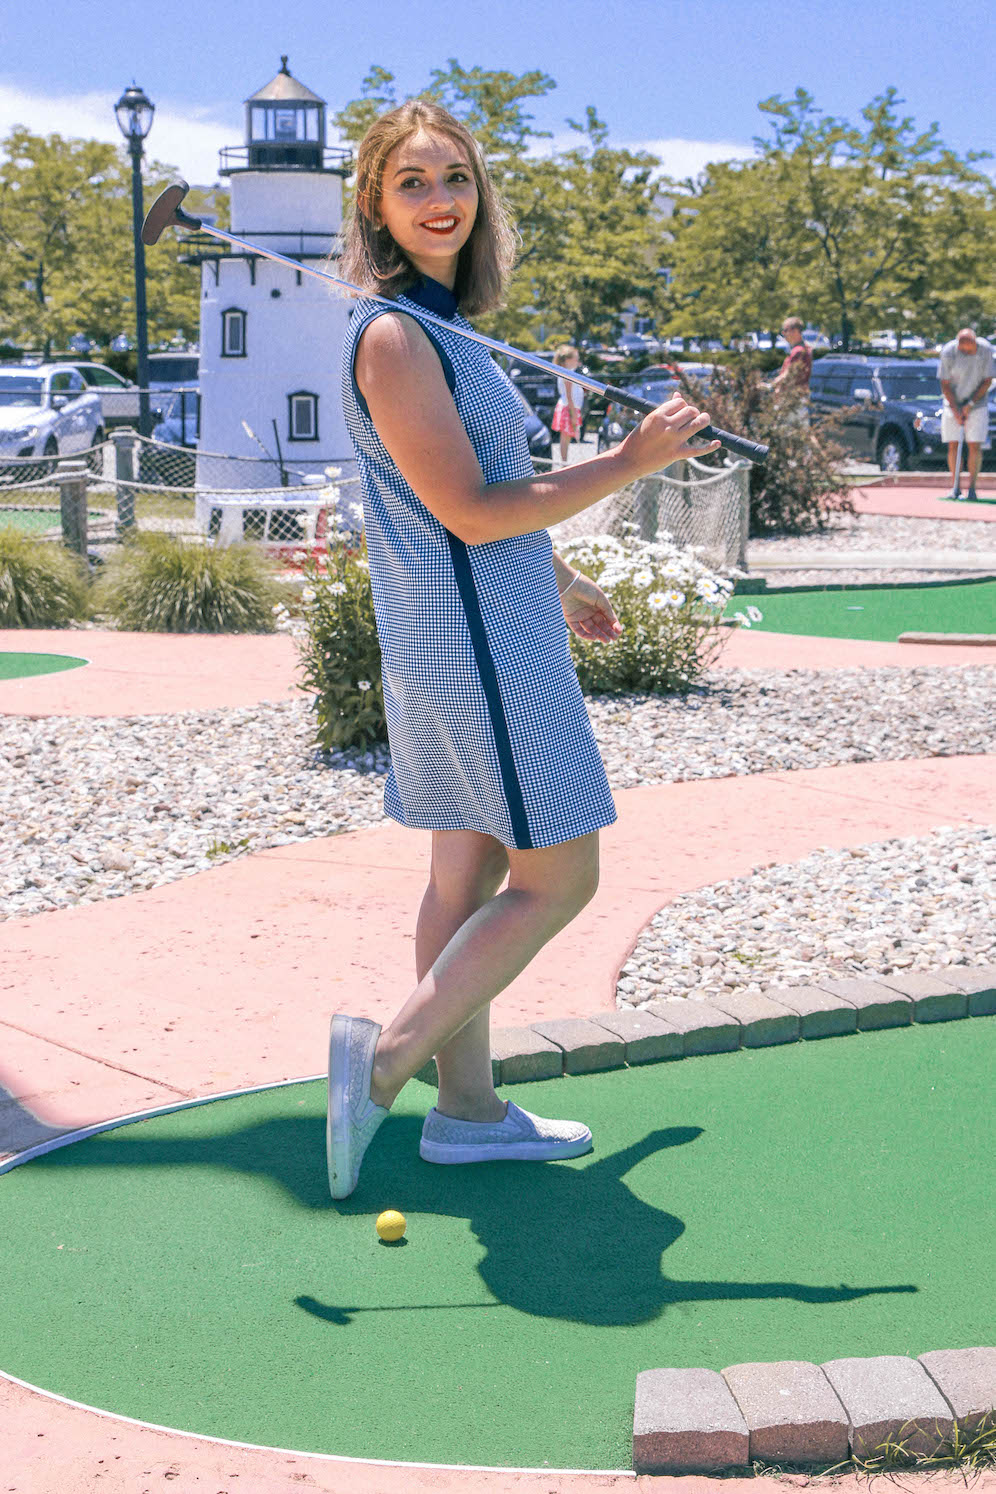 mini golf dating)